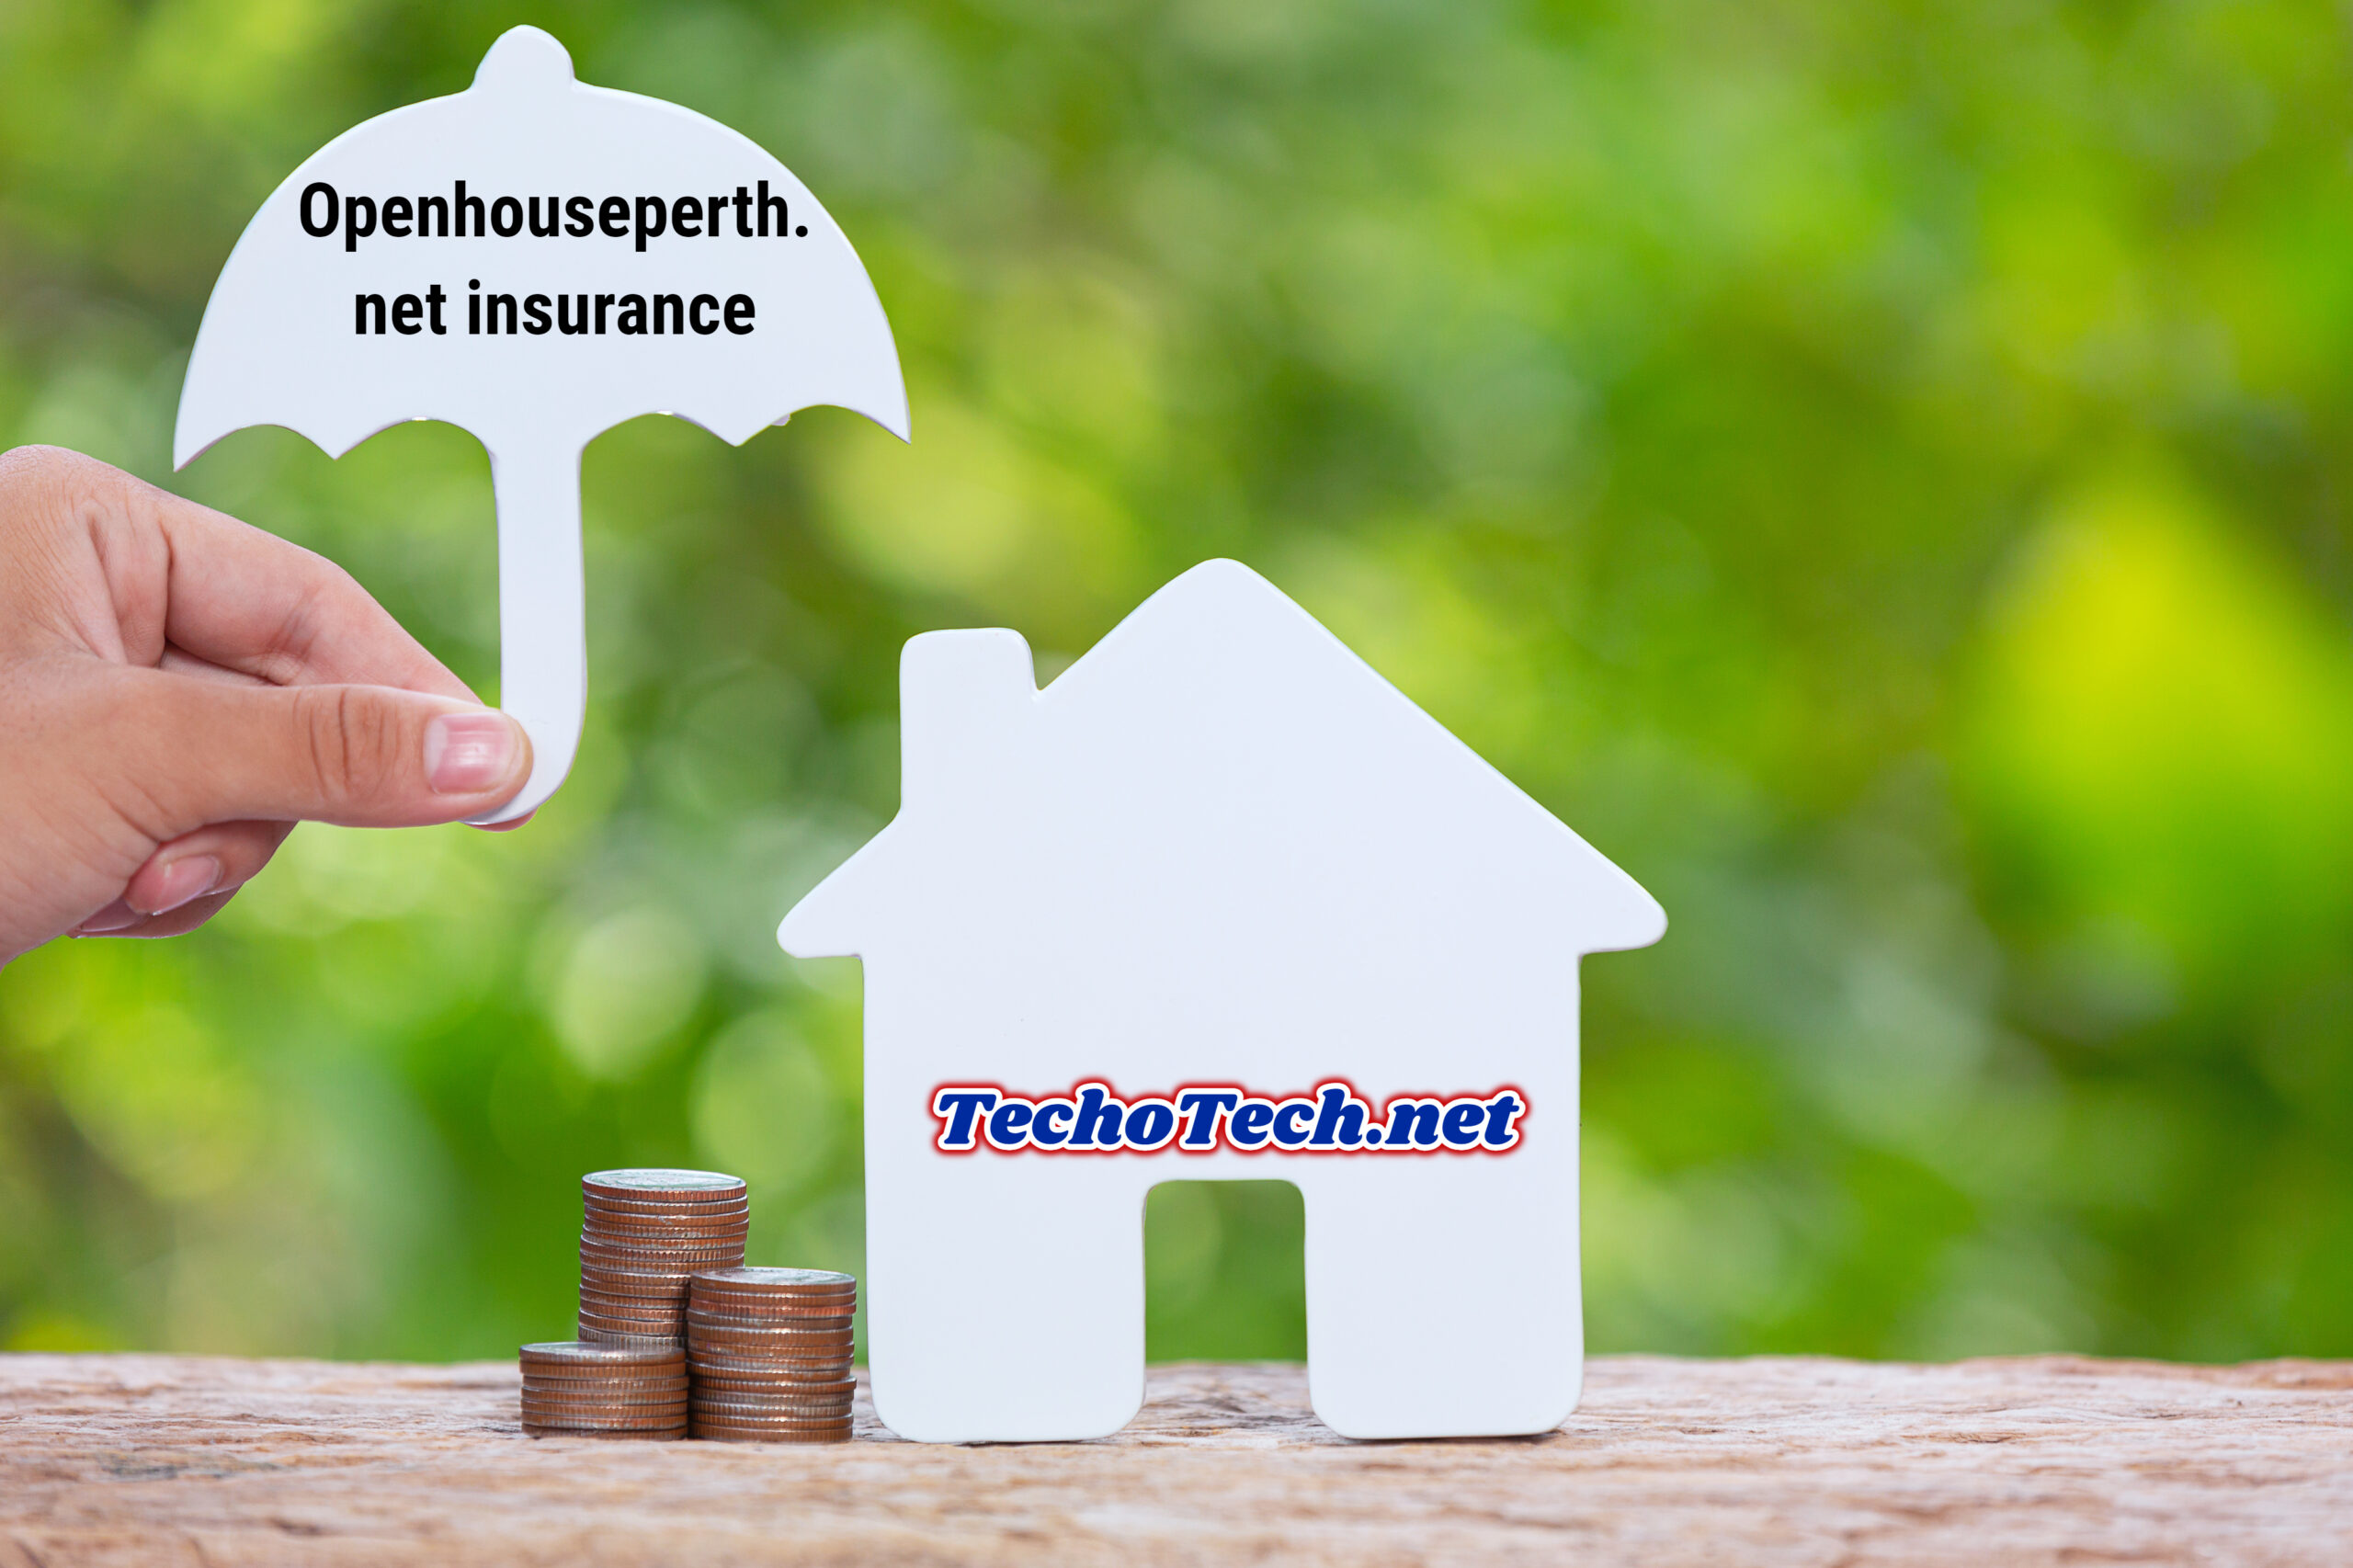 Openhouseperth.net insurance: Save Money on Your Insurance Premiums